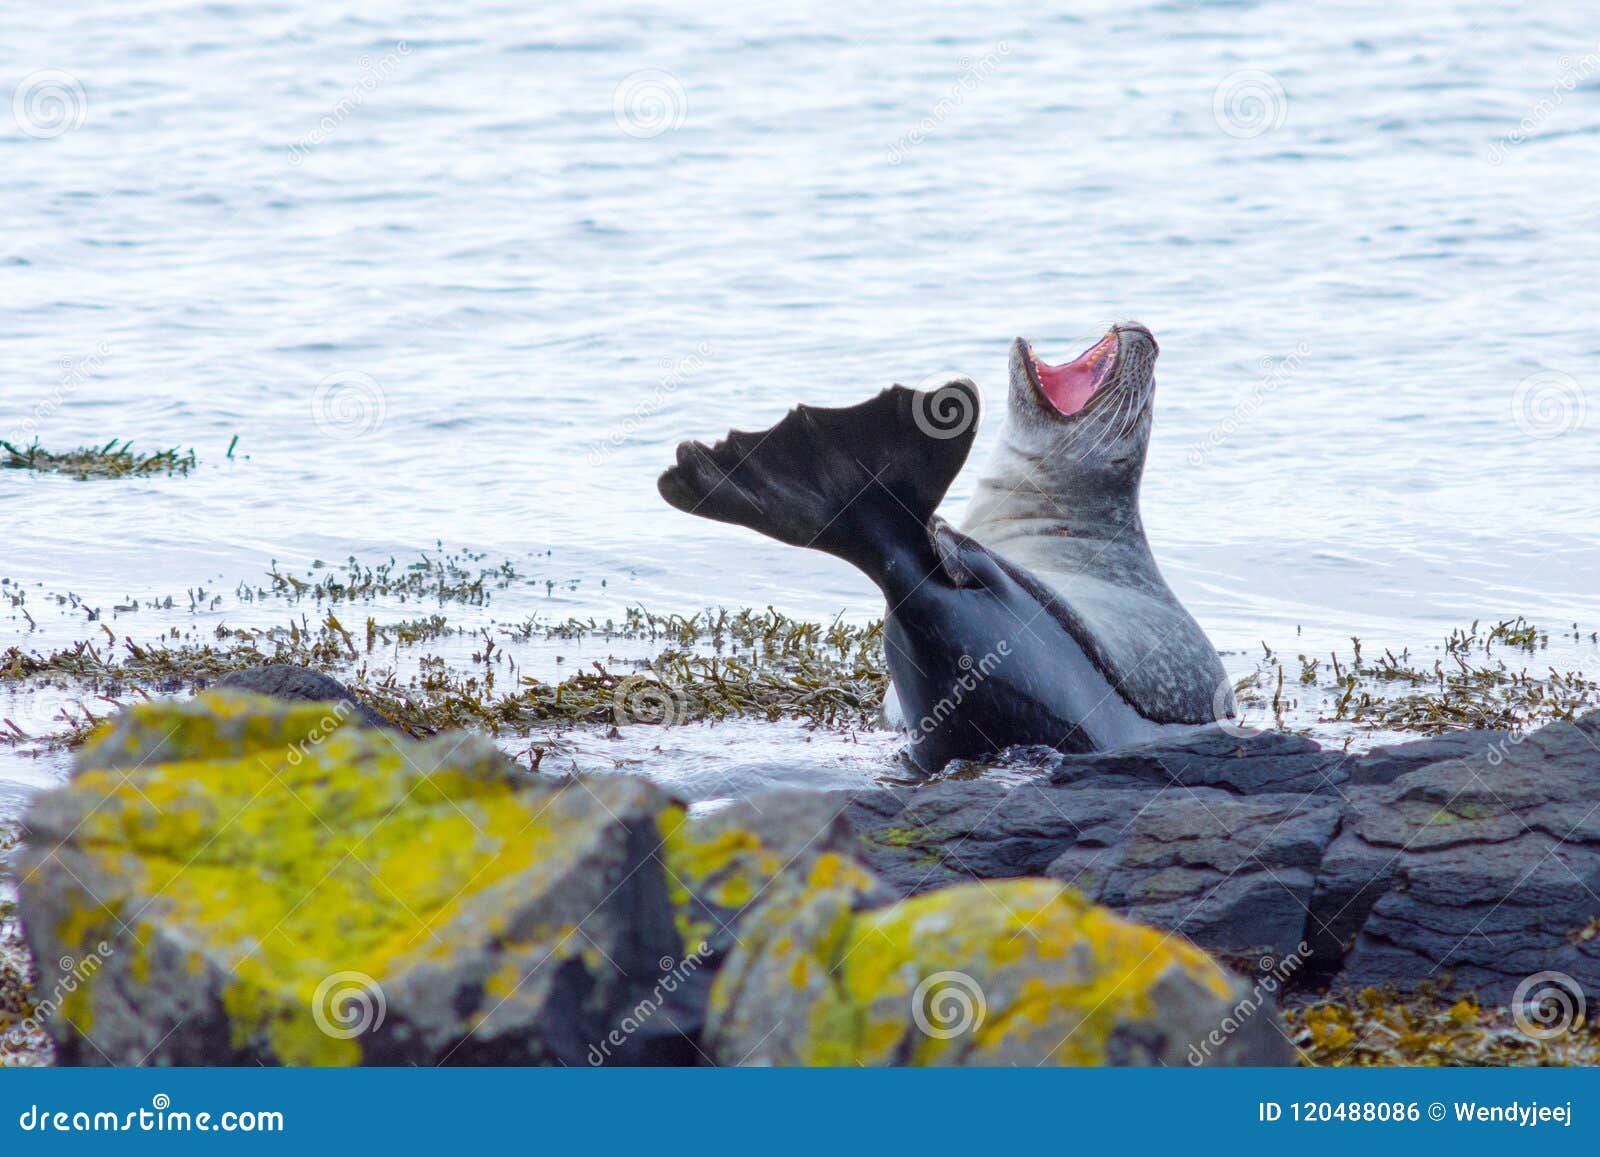 seal on north of iceland yawn, gape